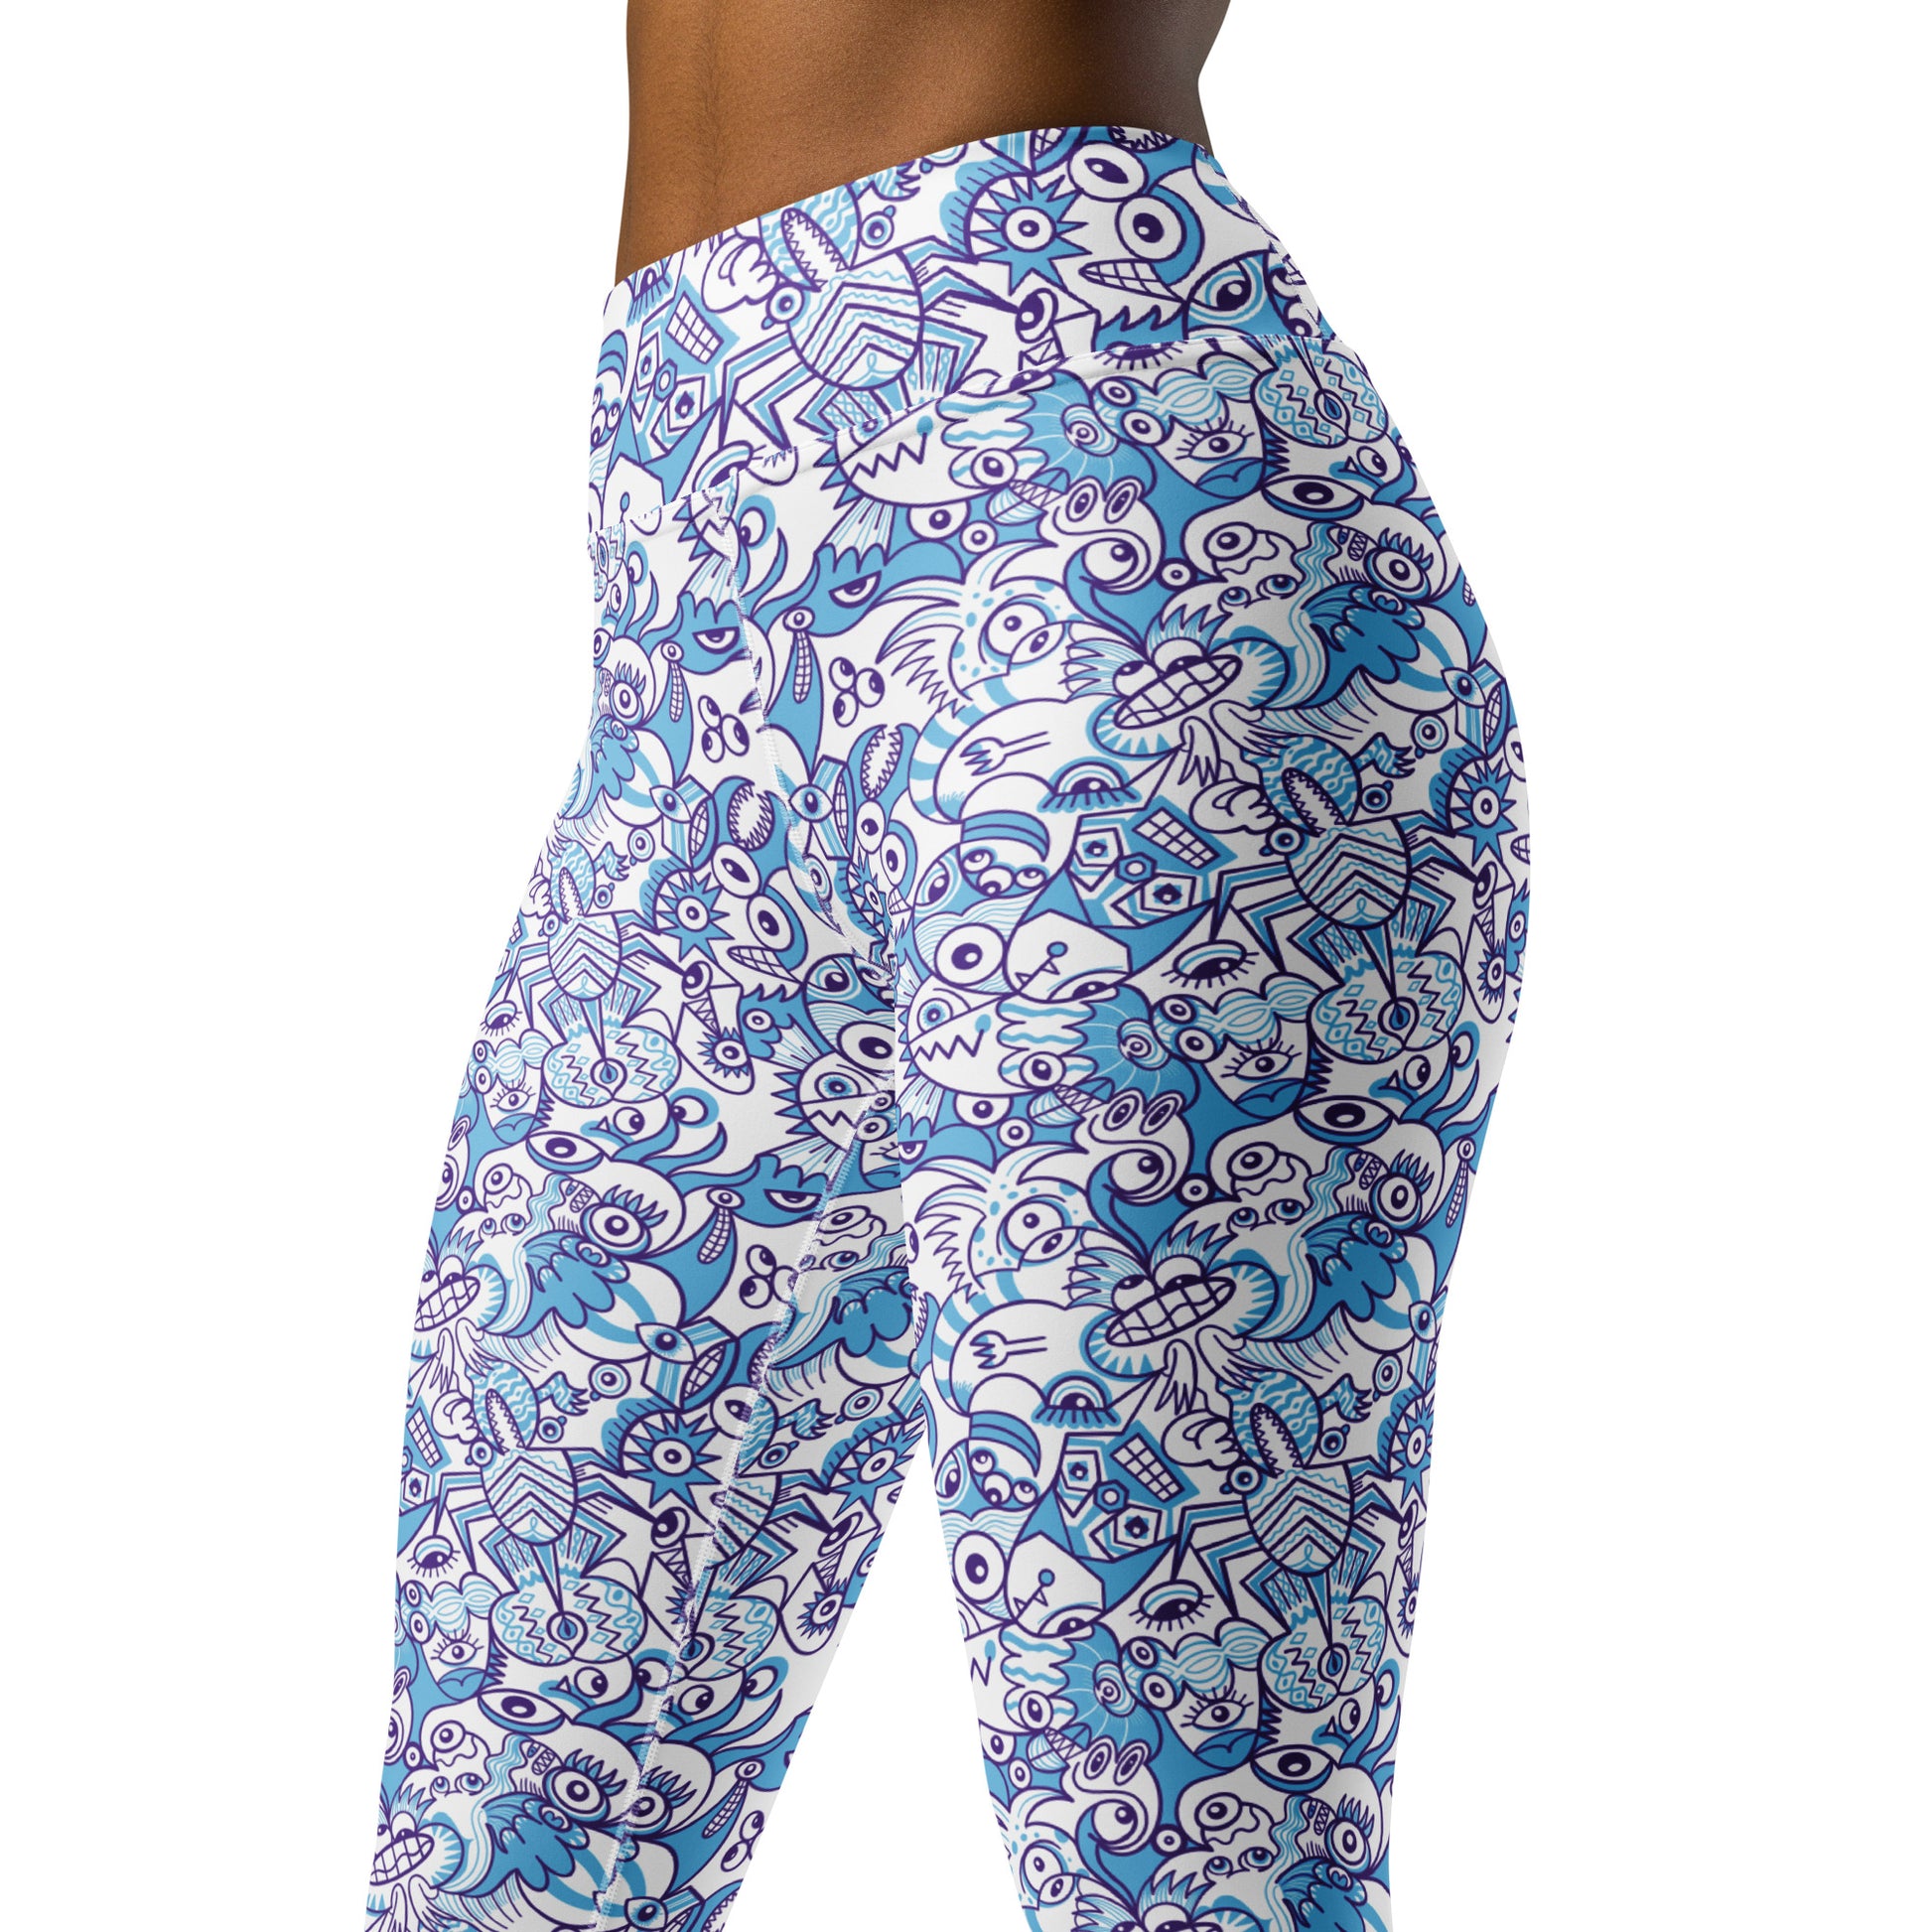 Whimsical Blue Doodle Critterscape pattern design - Yoga Leggings. Product details